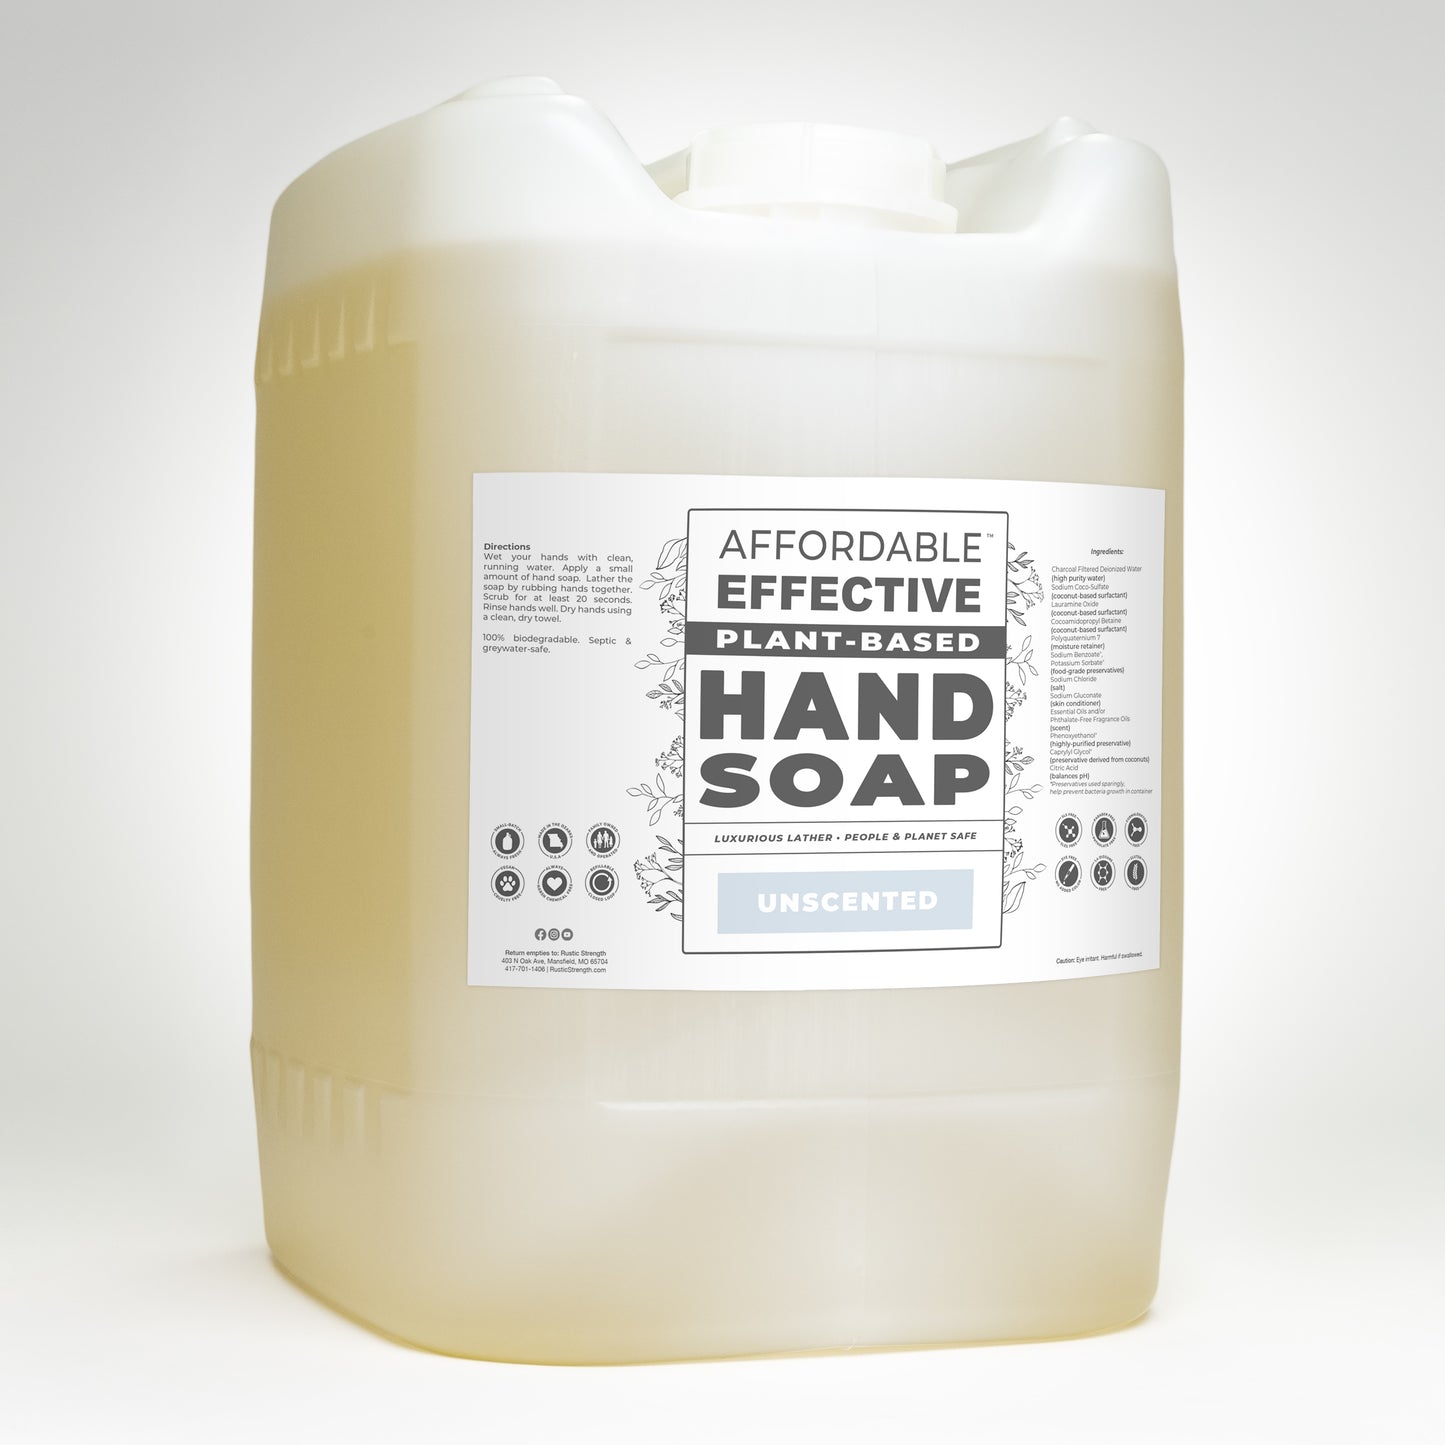 Affordable • Effective • Plant-Based | Hand Soap